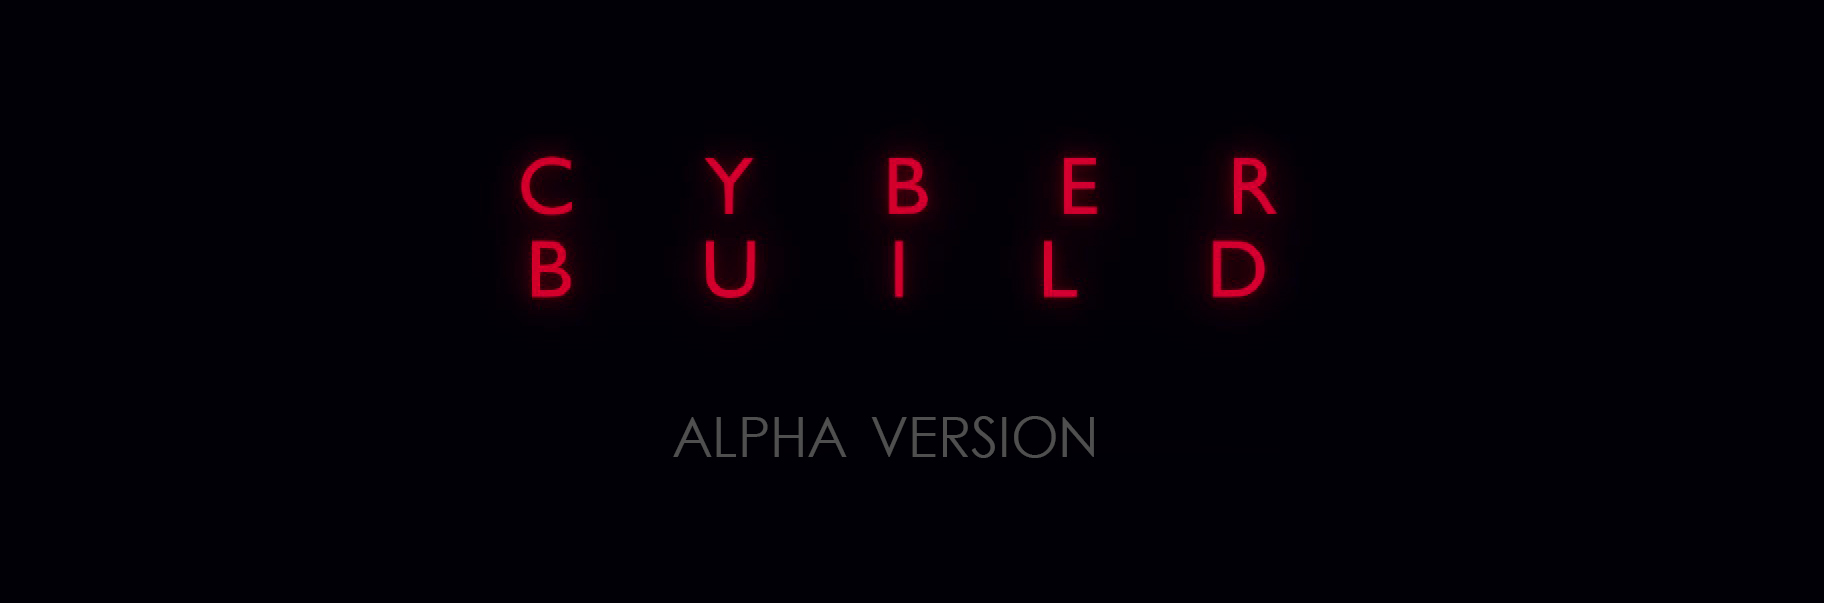 Cyberbuilder (Alpha)